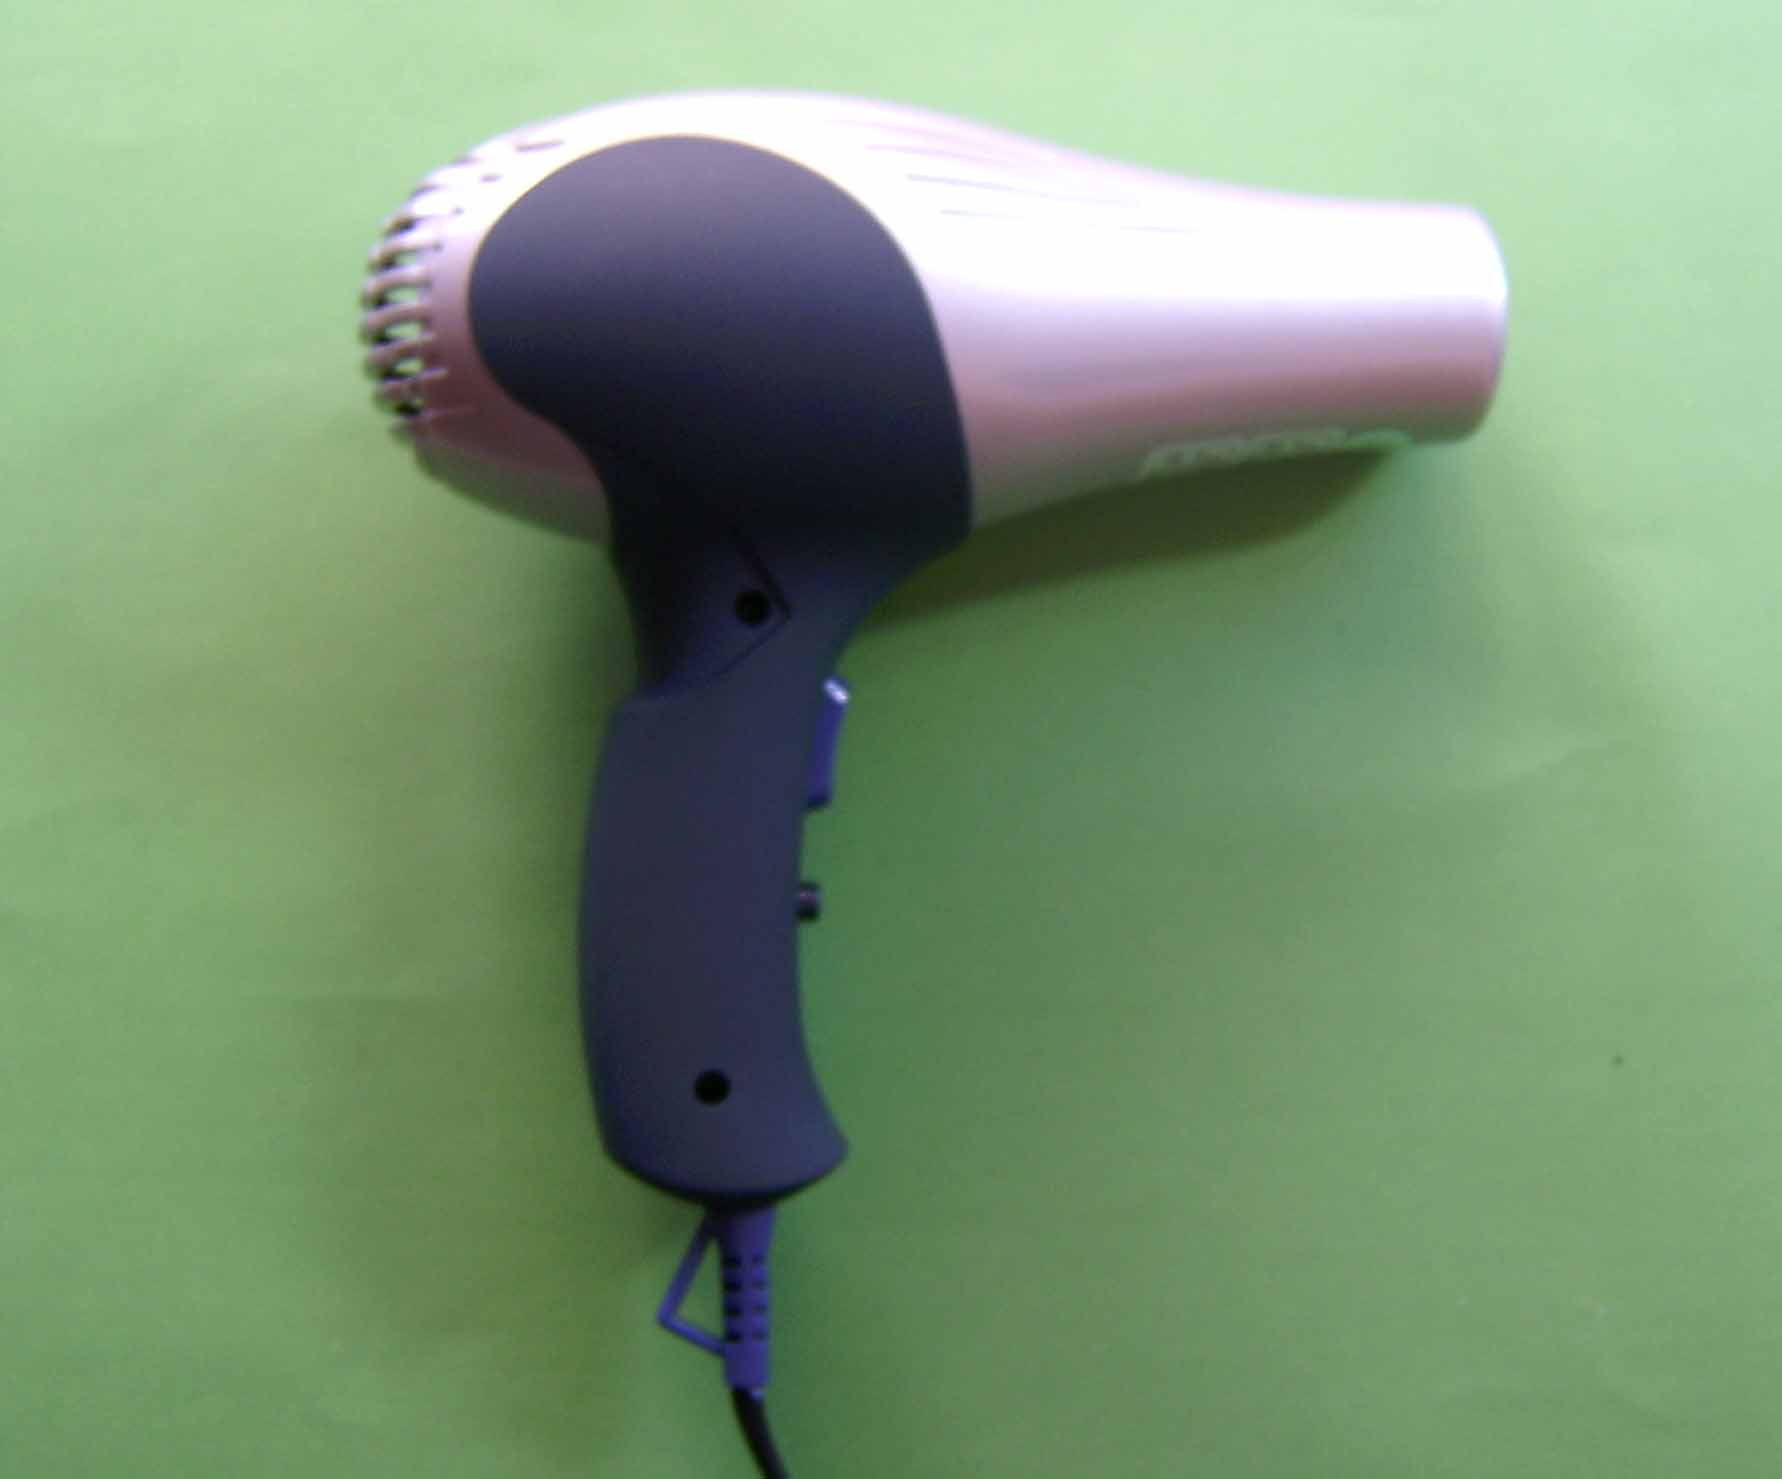  Hair Dryer (Föhn)